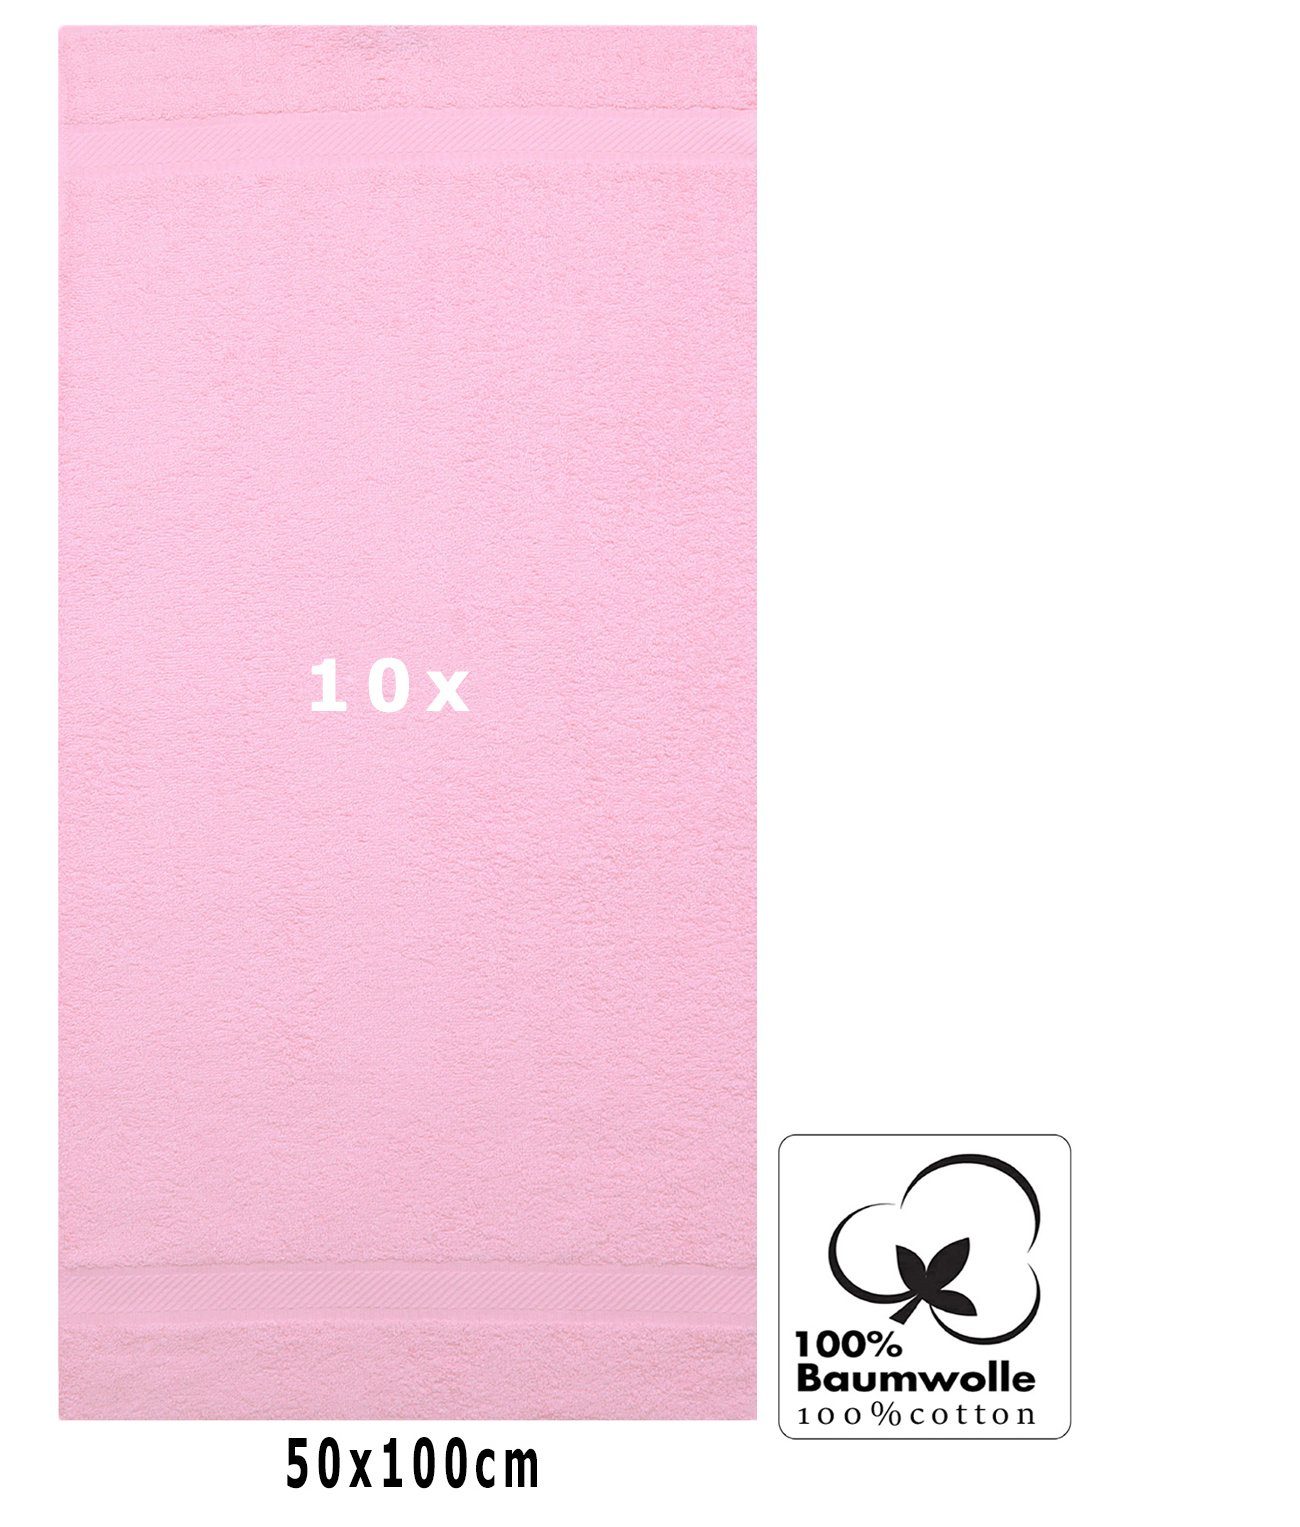 Betz Handtücher Rosé, Handtuch-Set 10 Baumwolle Farbe Palermo 50x100cm 100% Stück